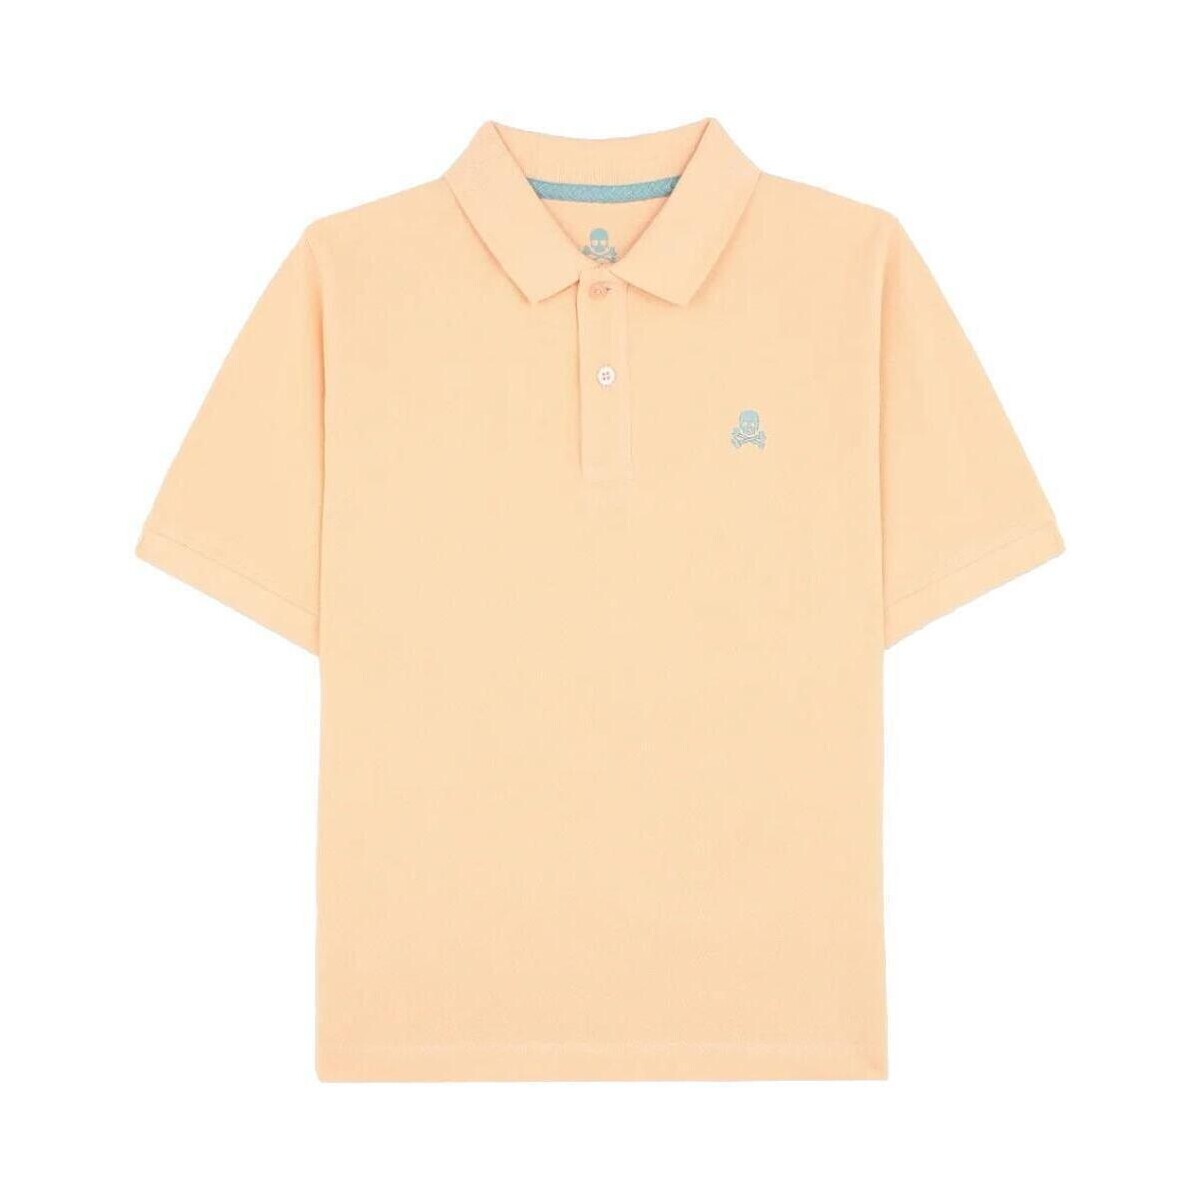 textil Niño Camisetas manga corta Scalpers 37259 LIGHT PEACH Naranja